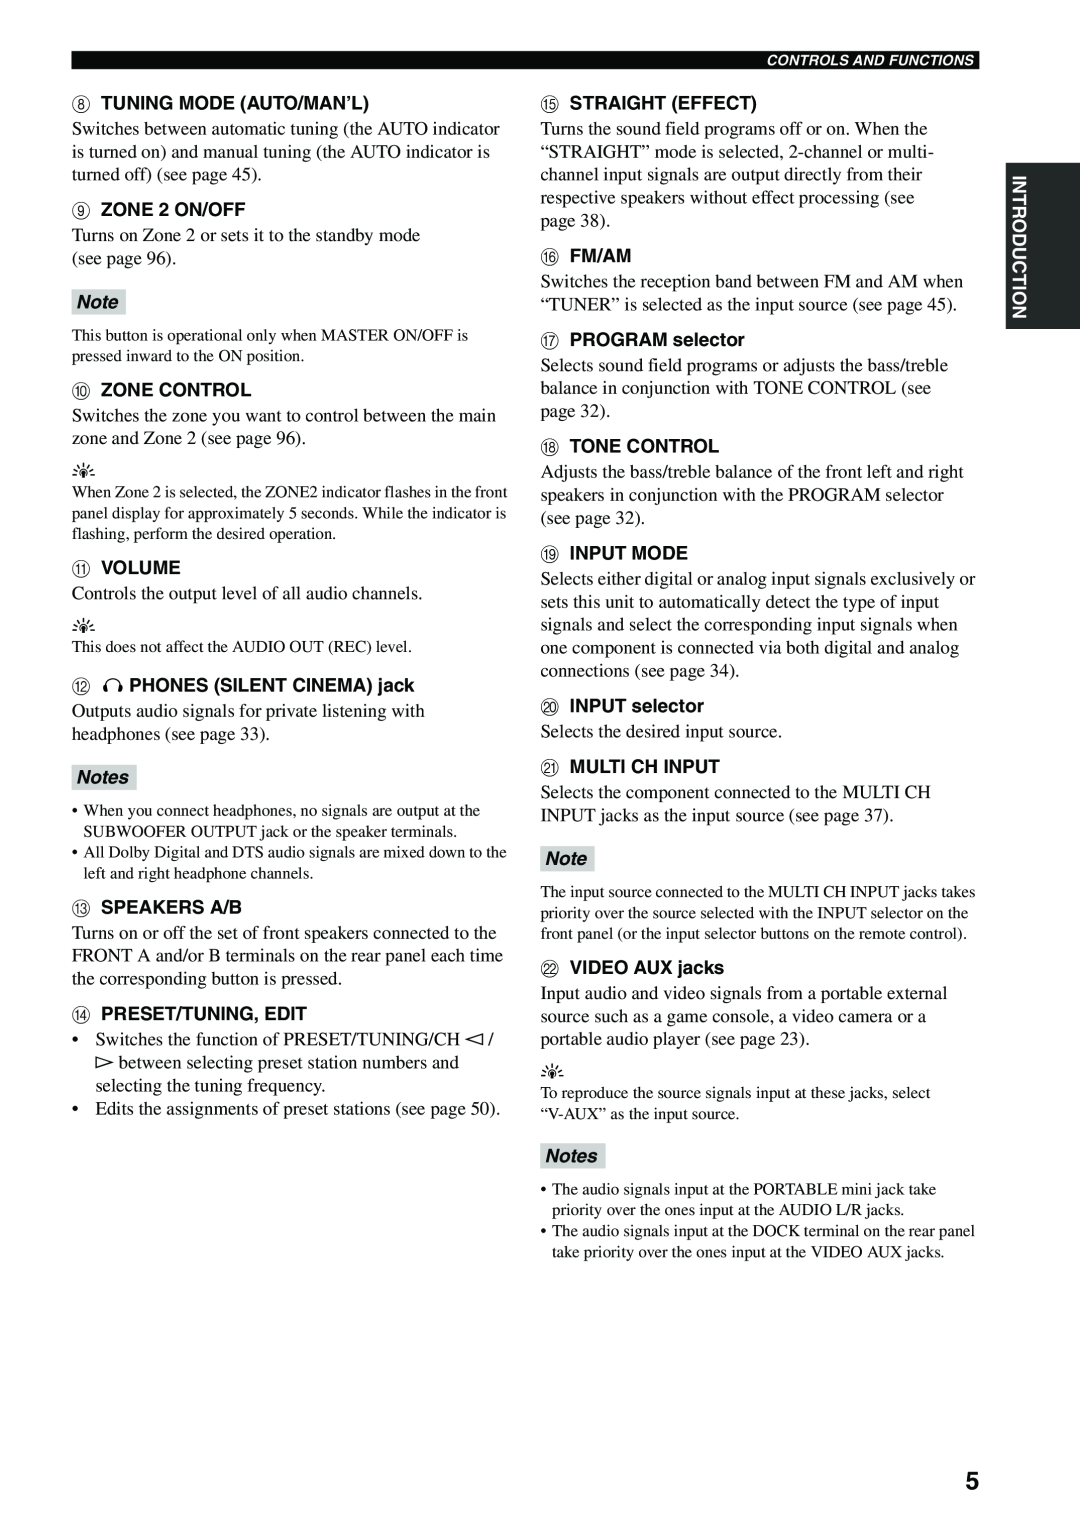 Yamaha RX-V559 owner manual 8TUNING MODE AUTO/MAN’L, Notes 